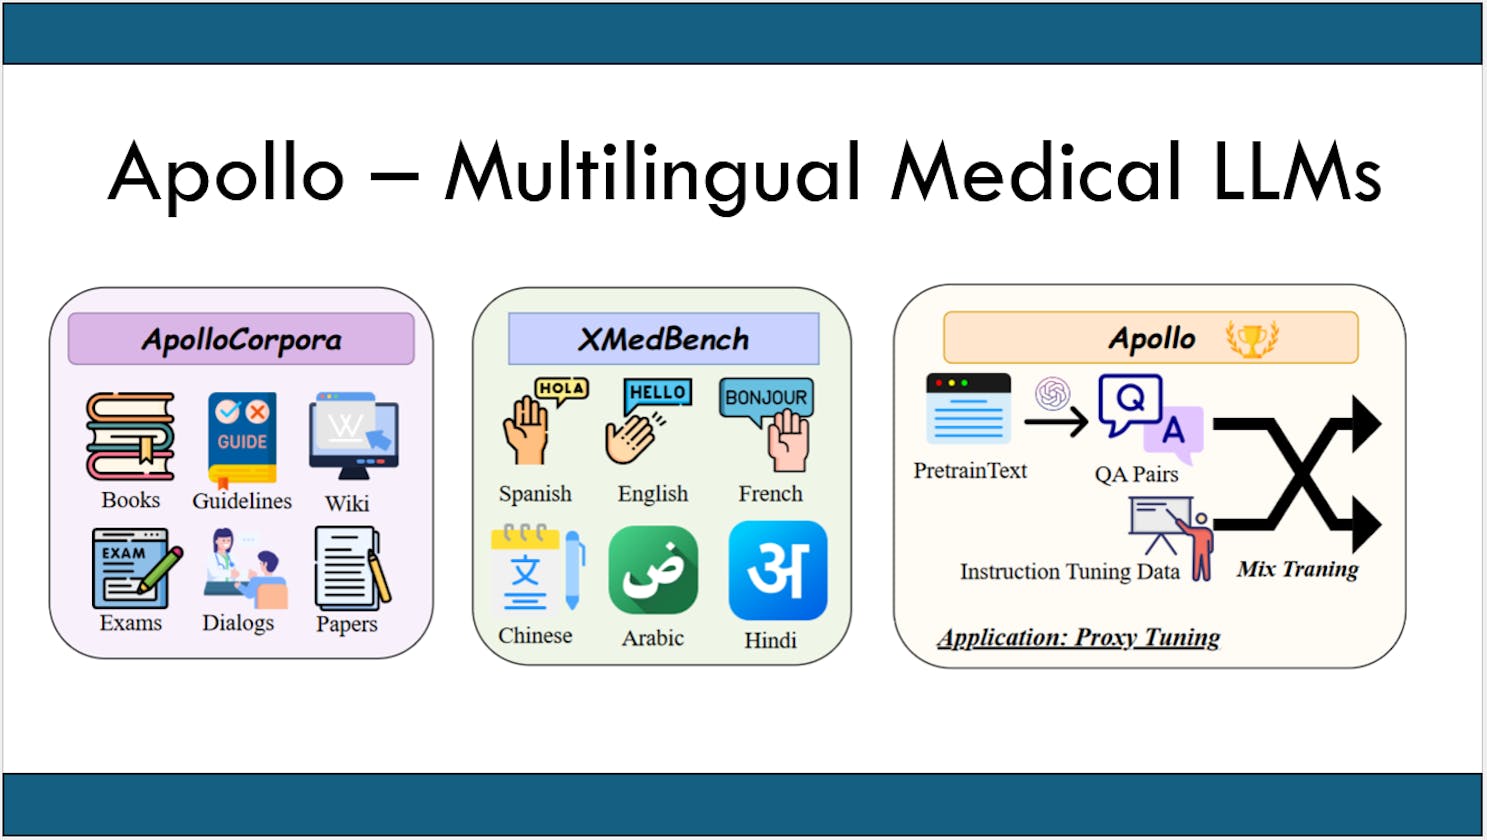 Apollo: Lightweight Multilingual Medical LLMs
towards Democratizing Medical AI to 6B People (short summary)